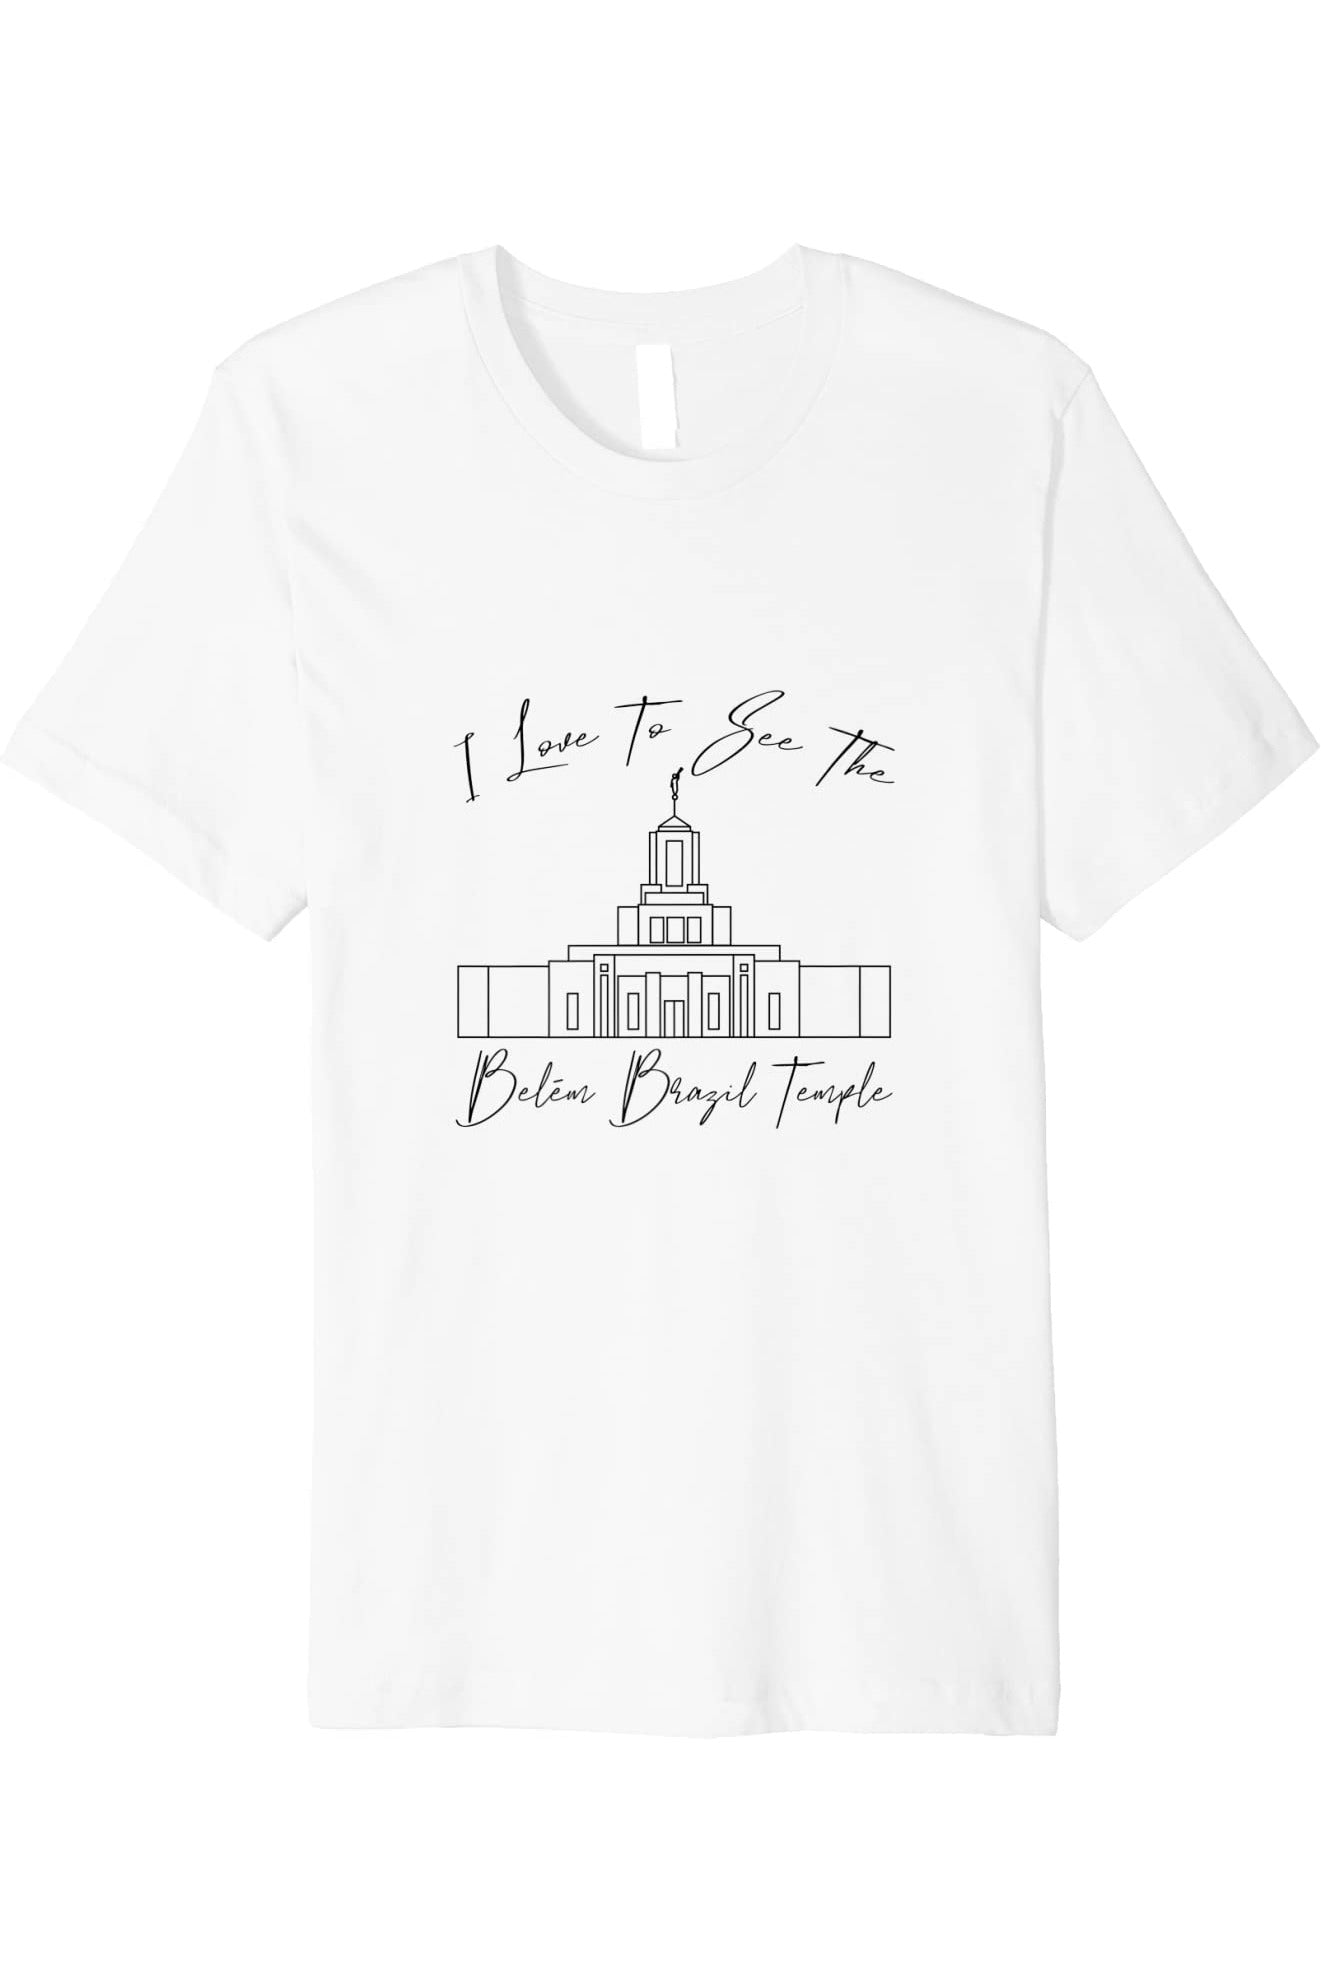 Belem Brazil Temple T-Shirt - Premium - Calligraphy Style (English) US